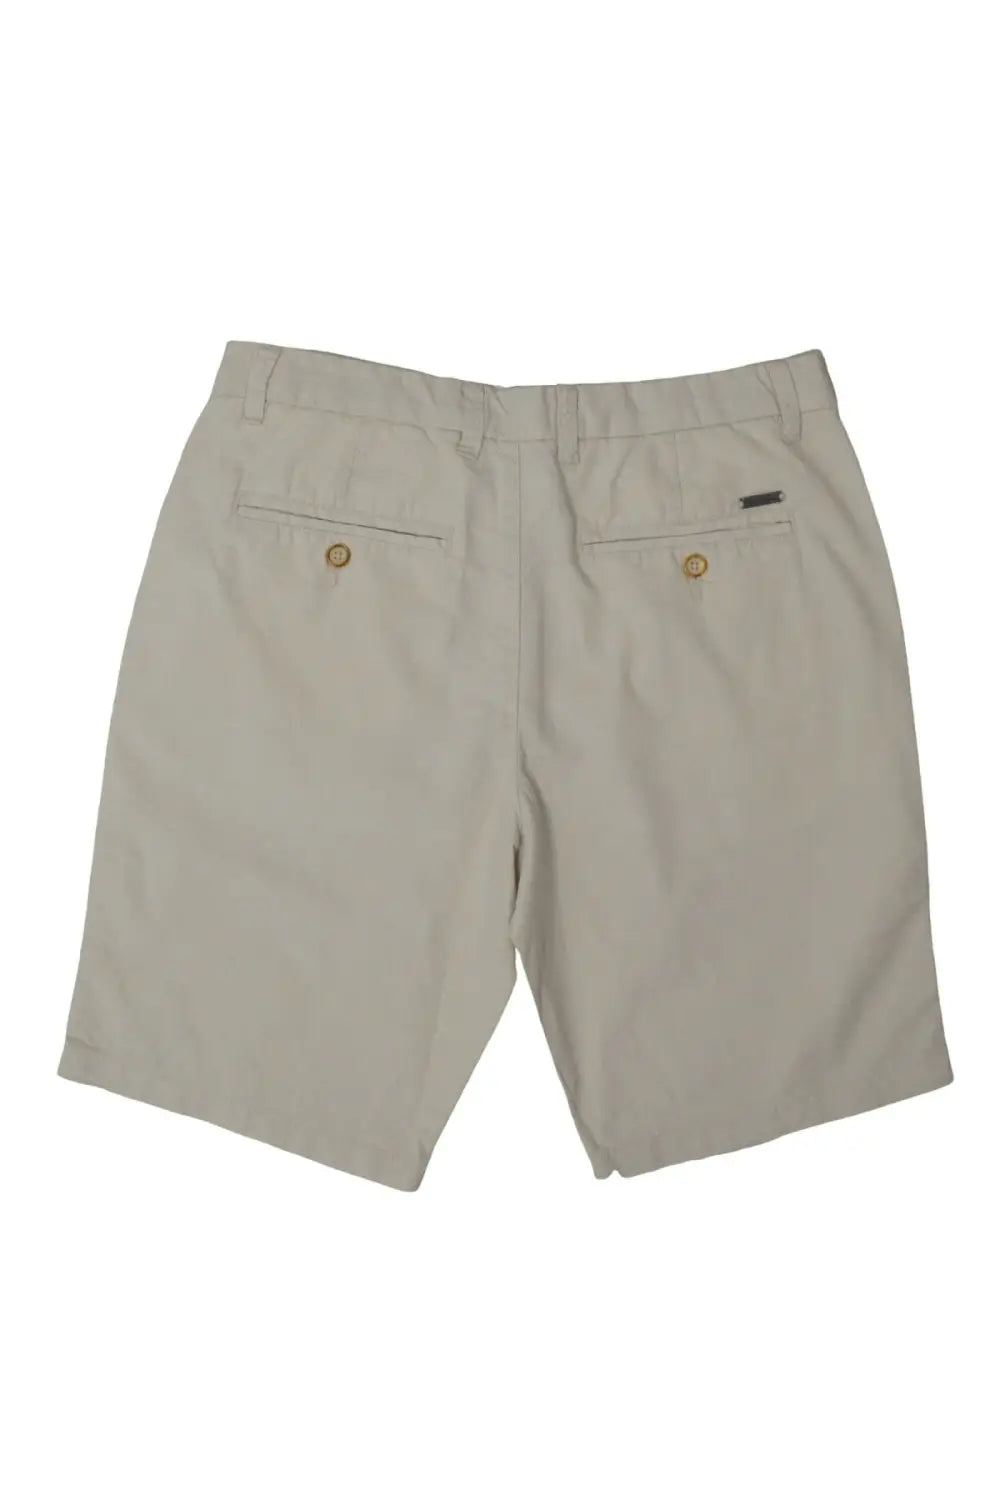 Pierre Cardin Flat Front Chino Shorts